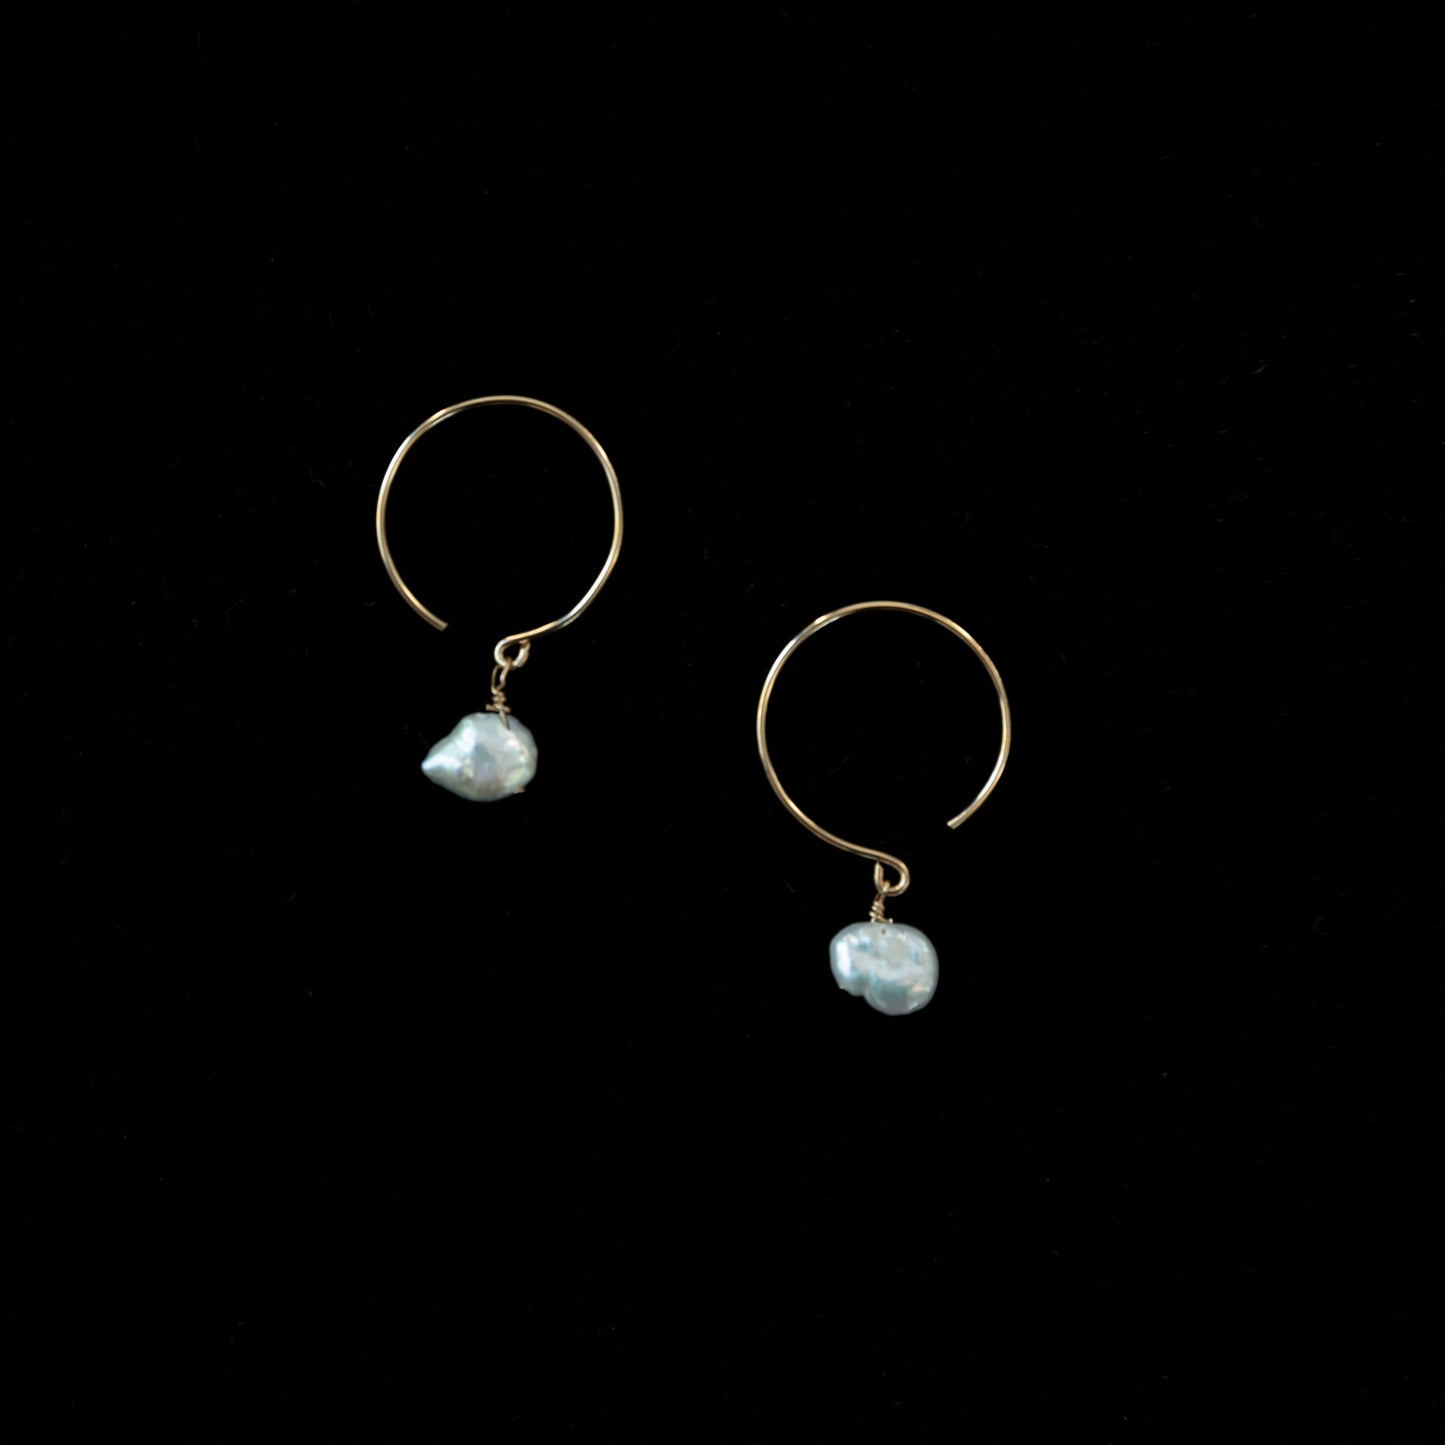 Mini Hoops with Keshi Pearls